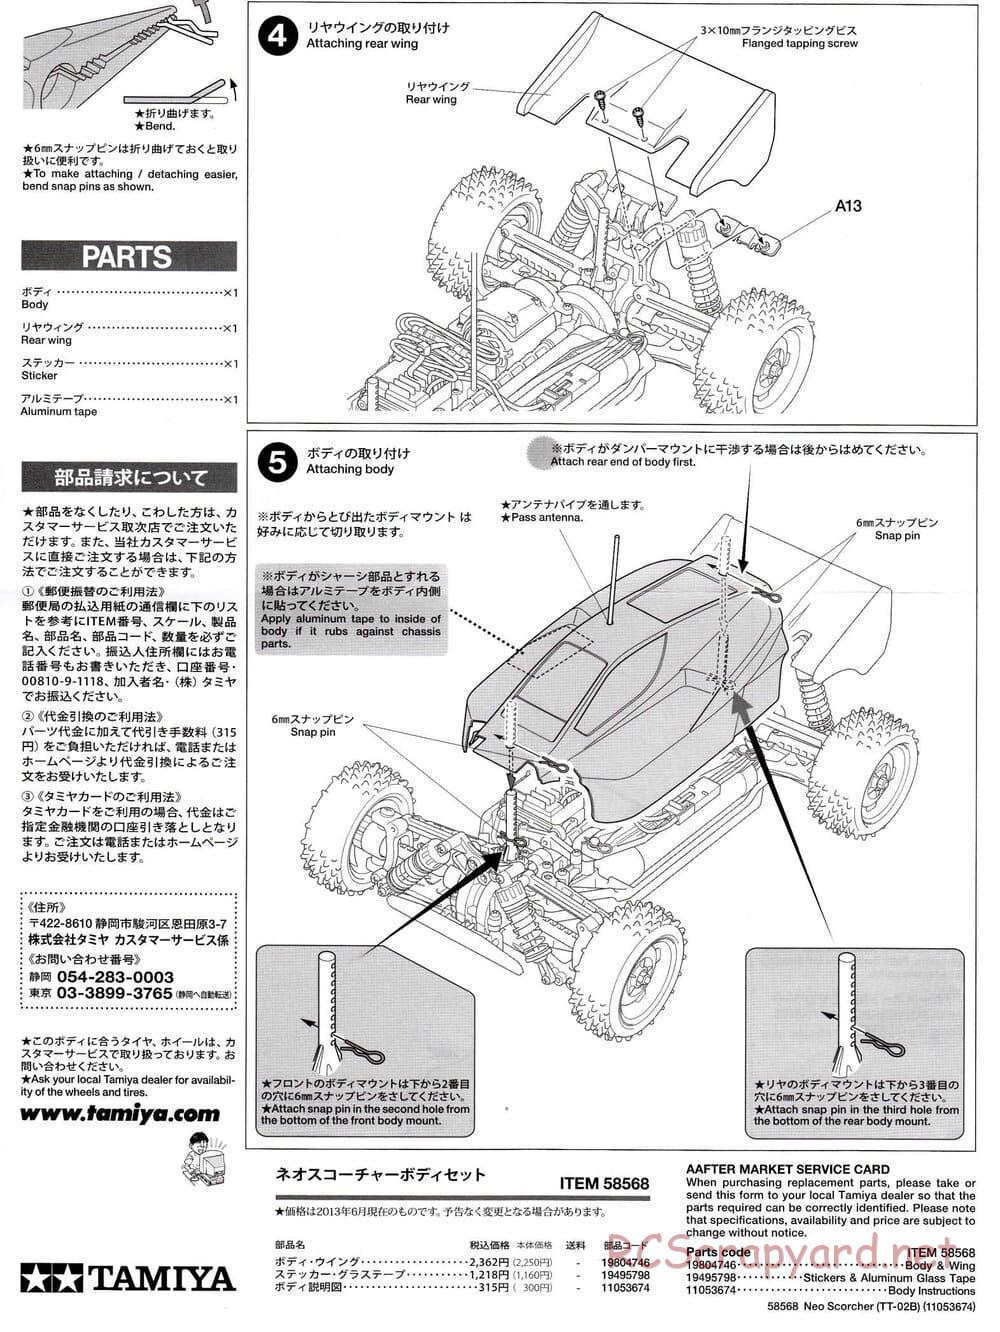 Tamiya - Neo Scorcher - TT-02B Chassis - Manual - Page 4